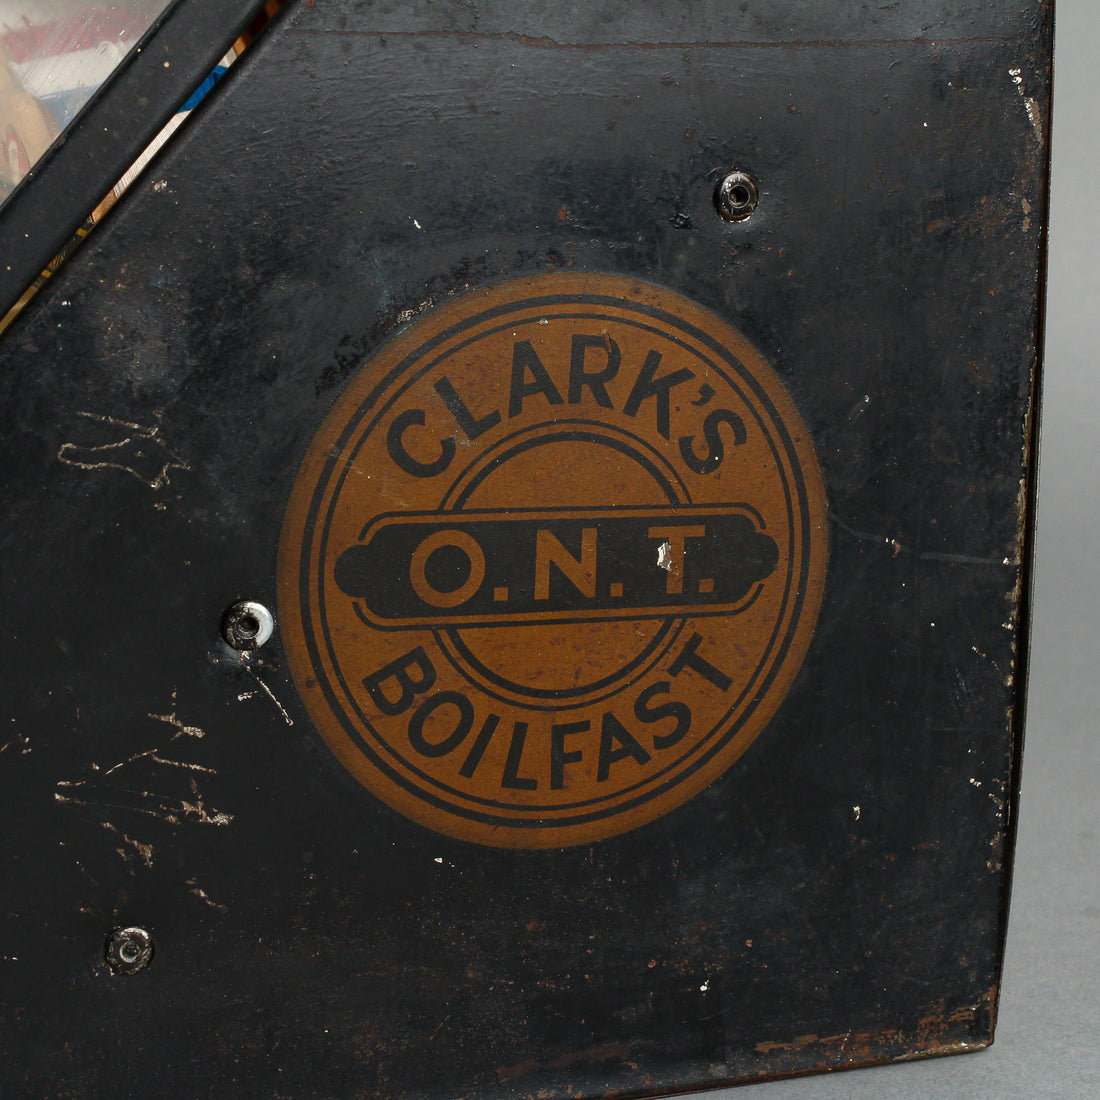 CLARKS O.N.T. BOILFAST Vintage Metal 3-Tray Thread Merchandiser